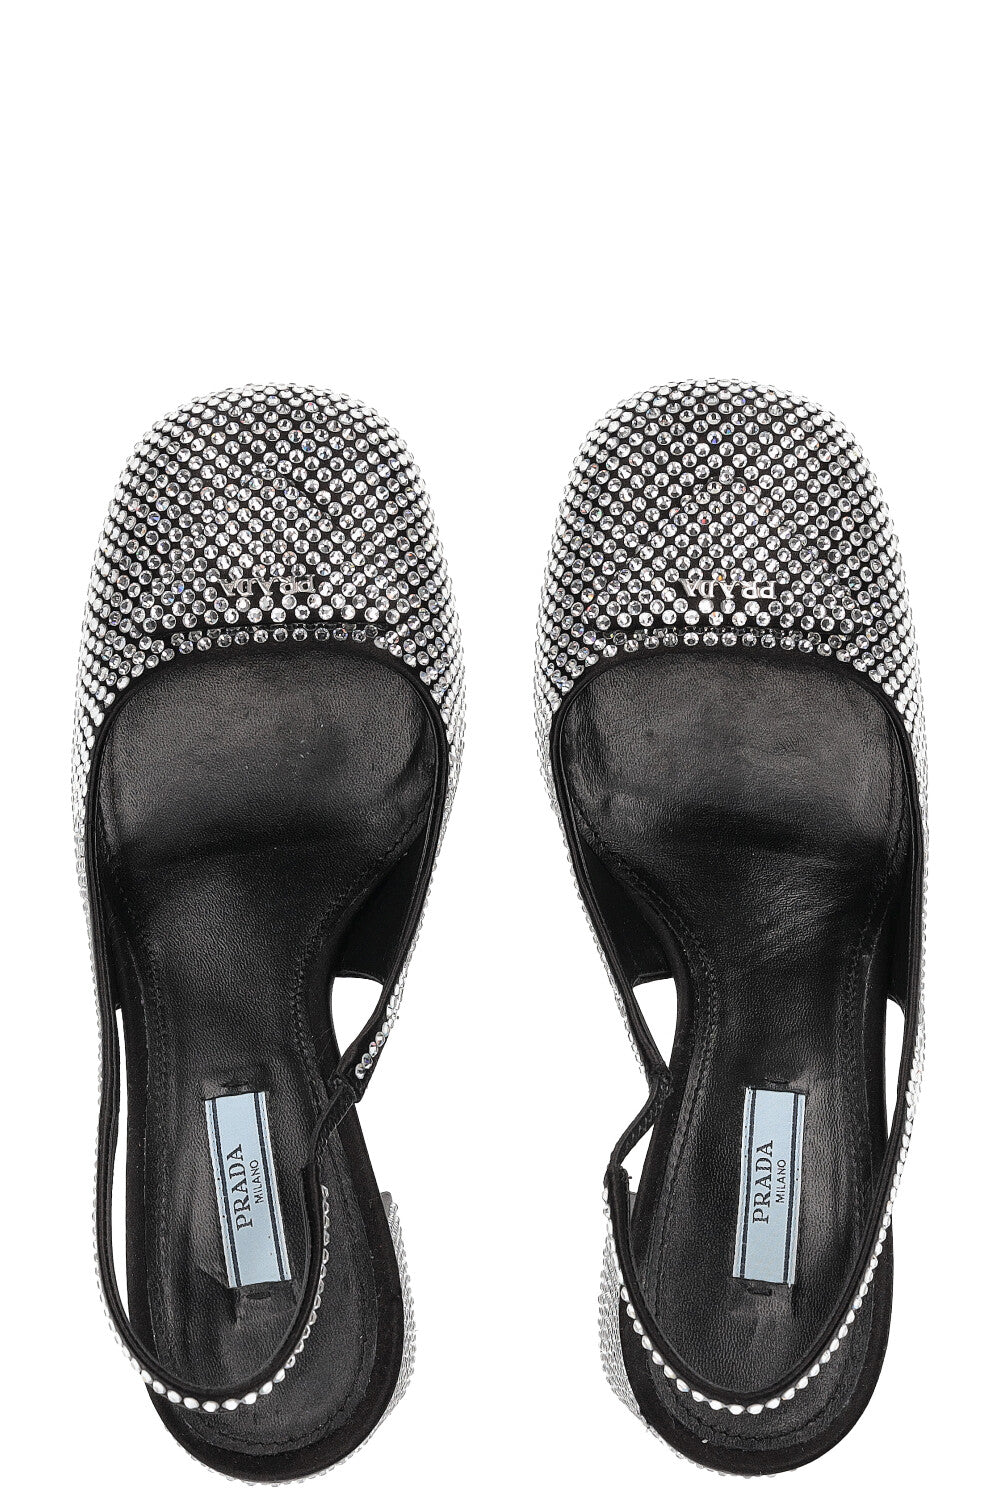 PRADA slingback heels with crystals